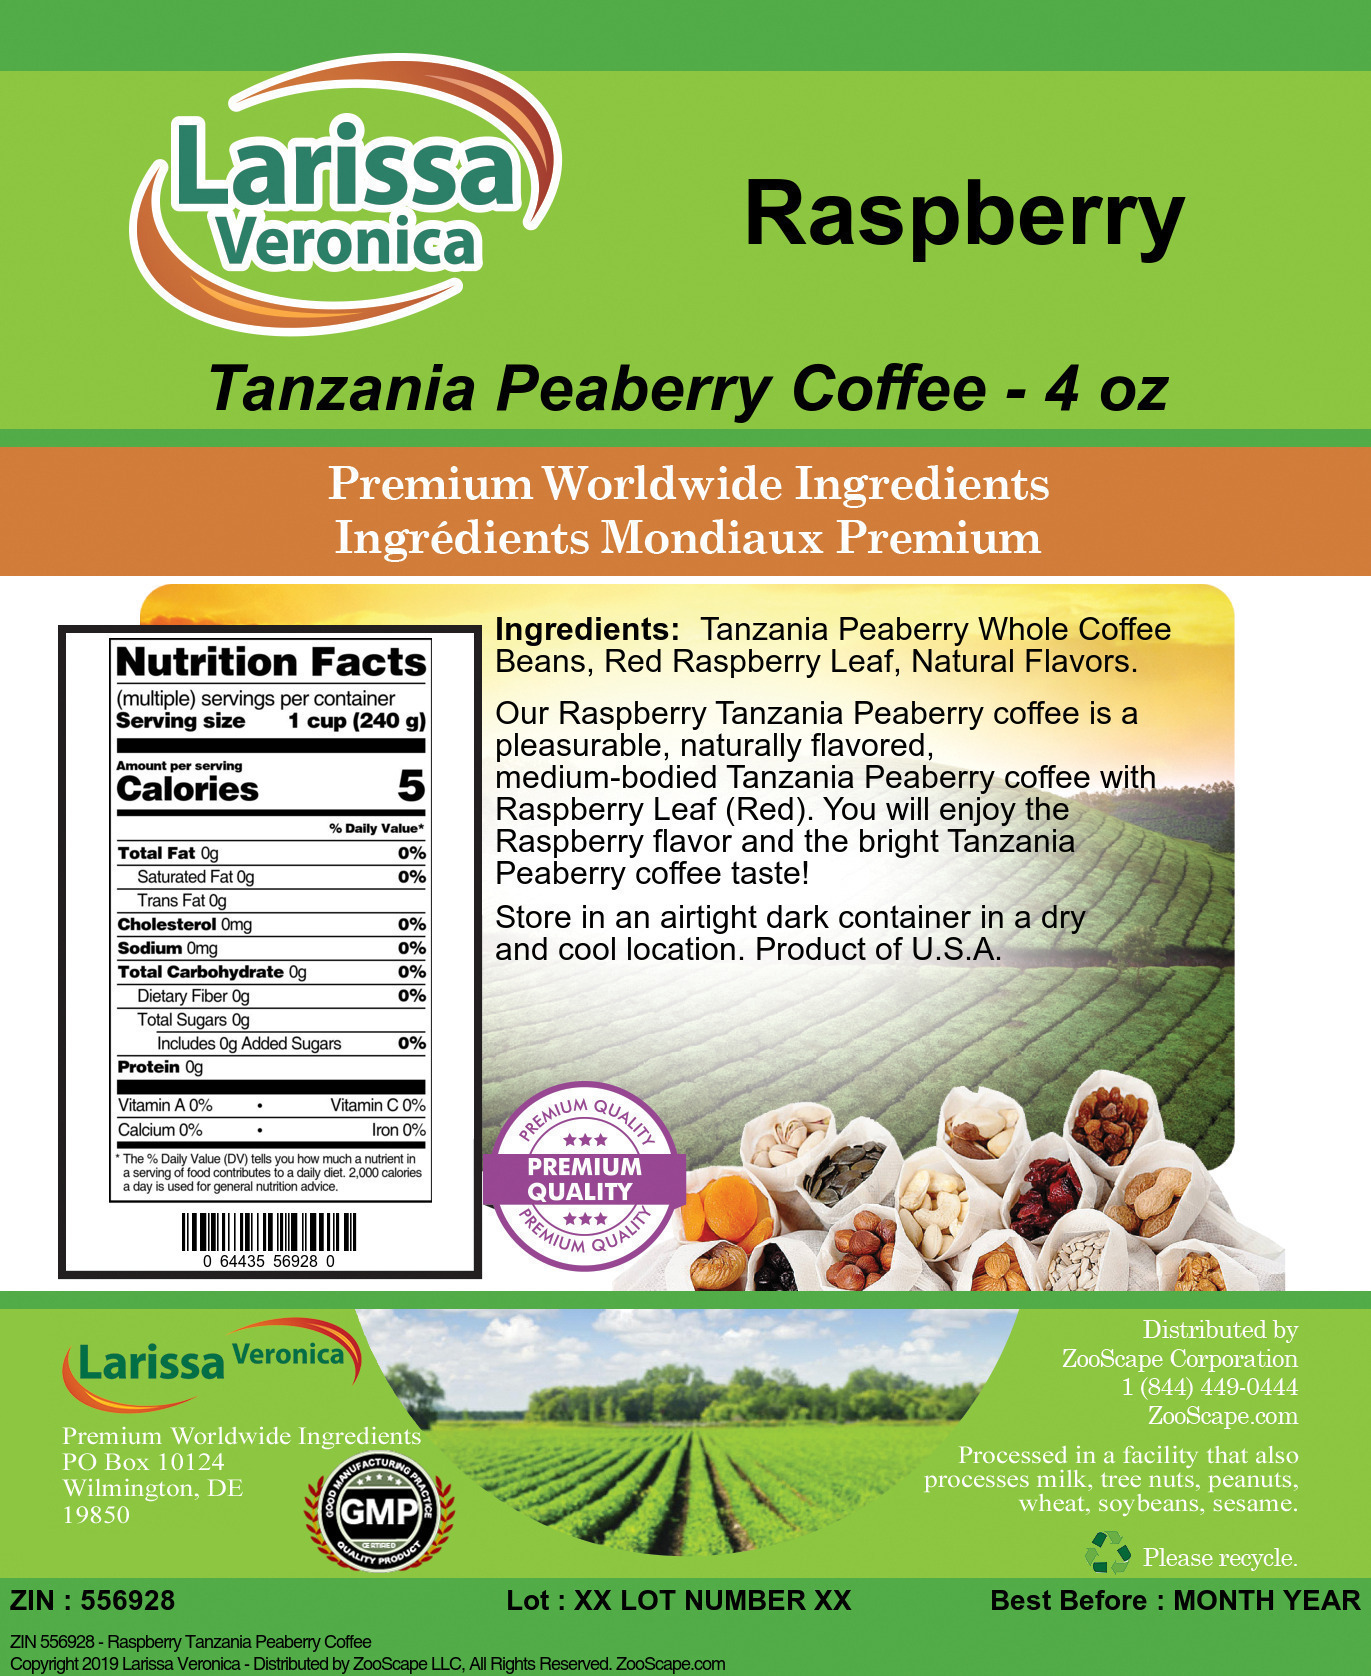 Raspberry Tanzania Peaberry Coffee - Label